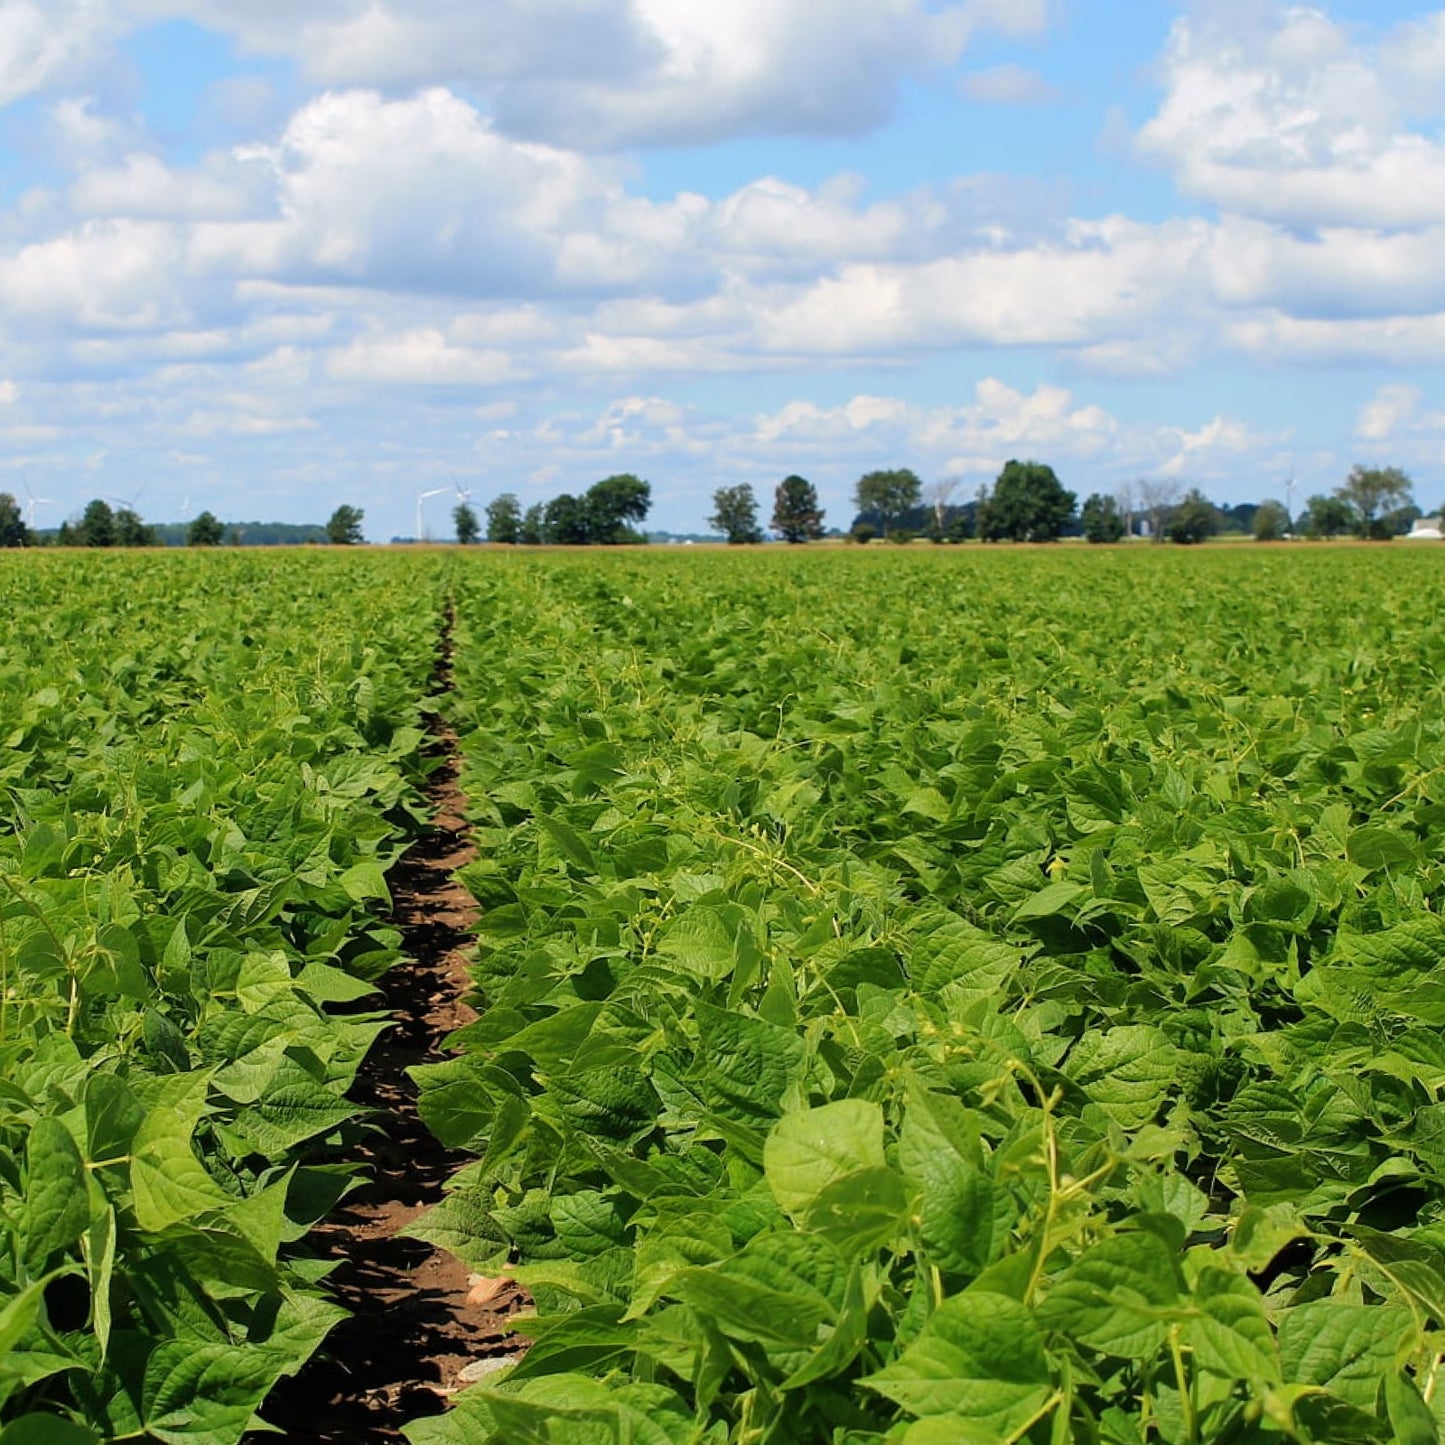 Black Beans // Michigan Grown, USDA Organic Certified, Non-GMO